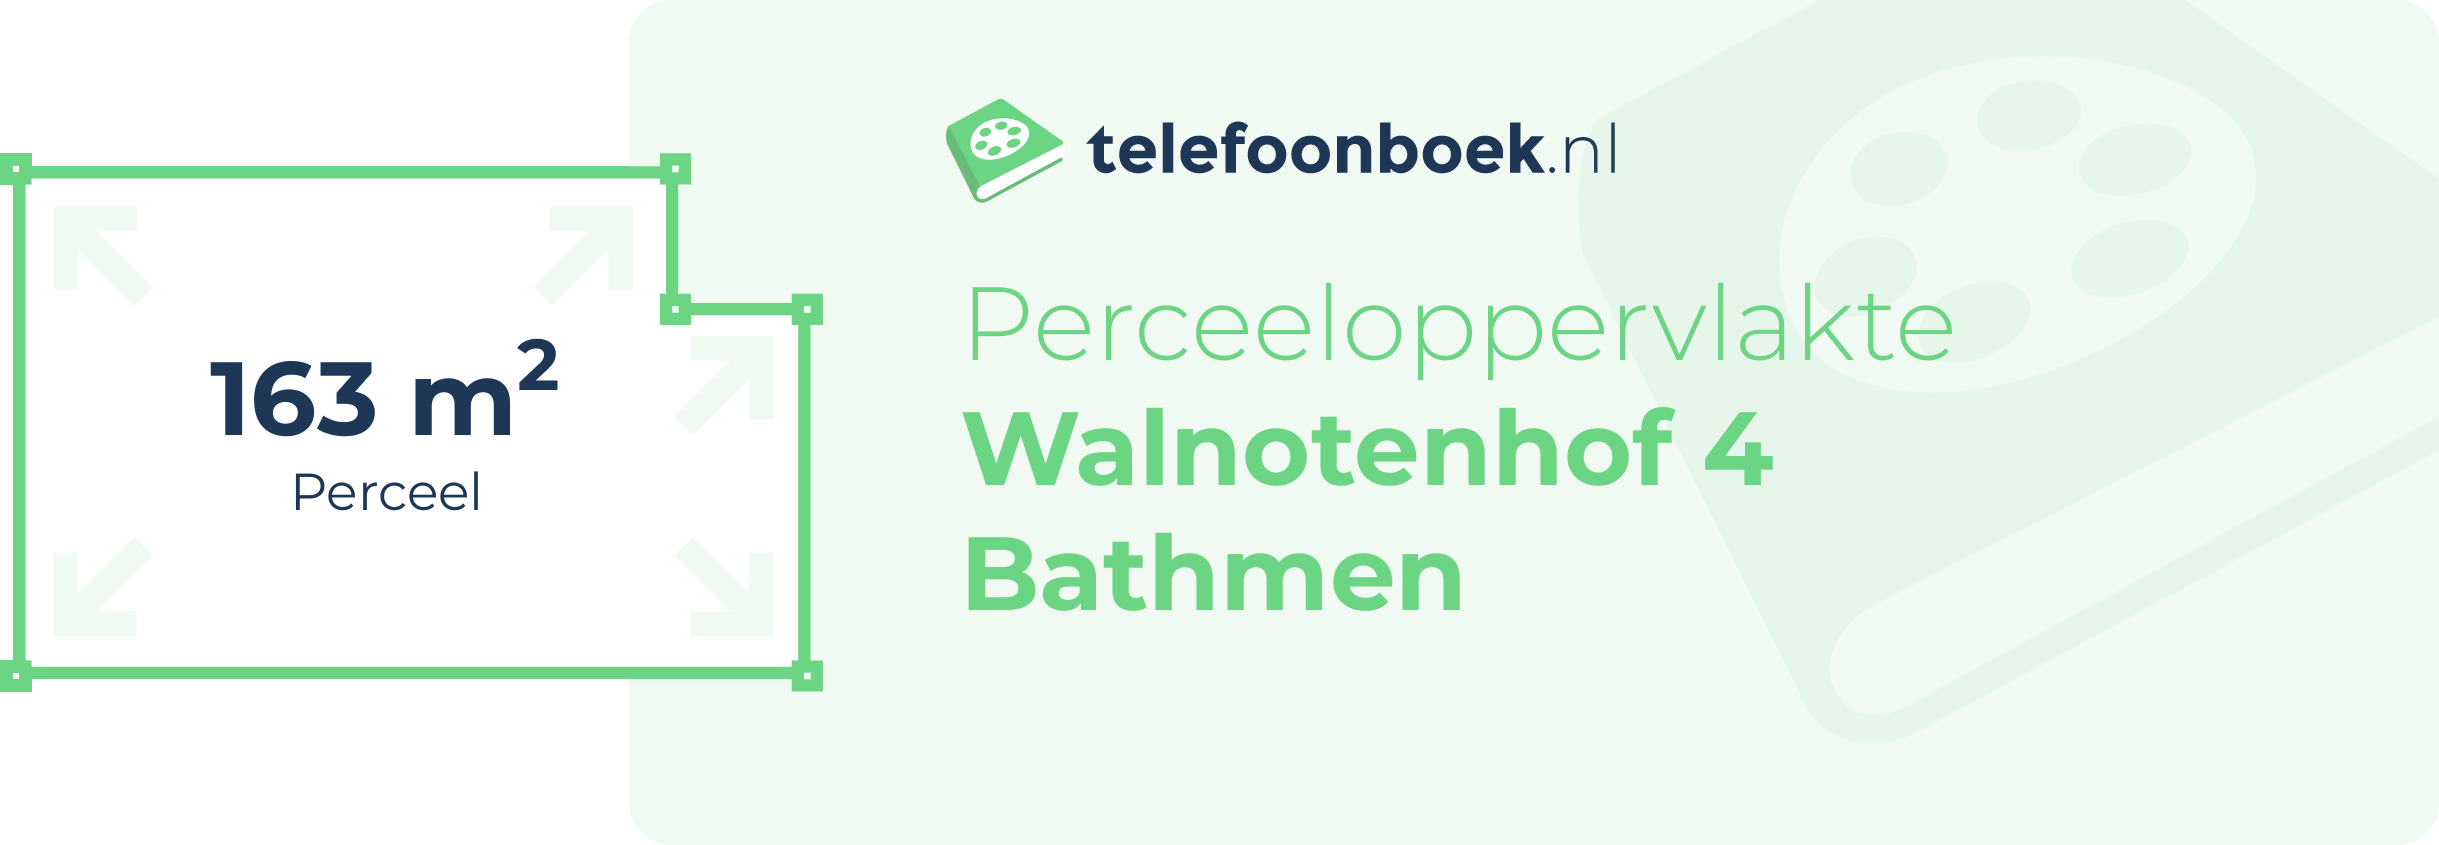 Perceeloppervlakte Walnotenhof 4 Bathmen